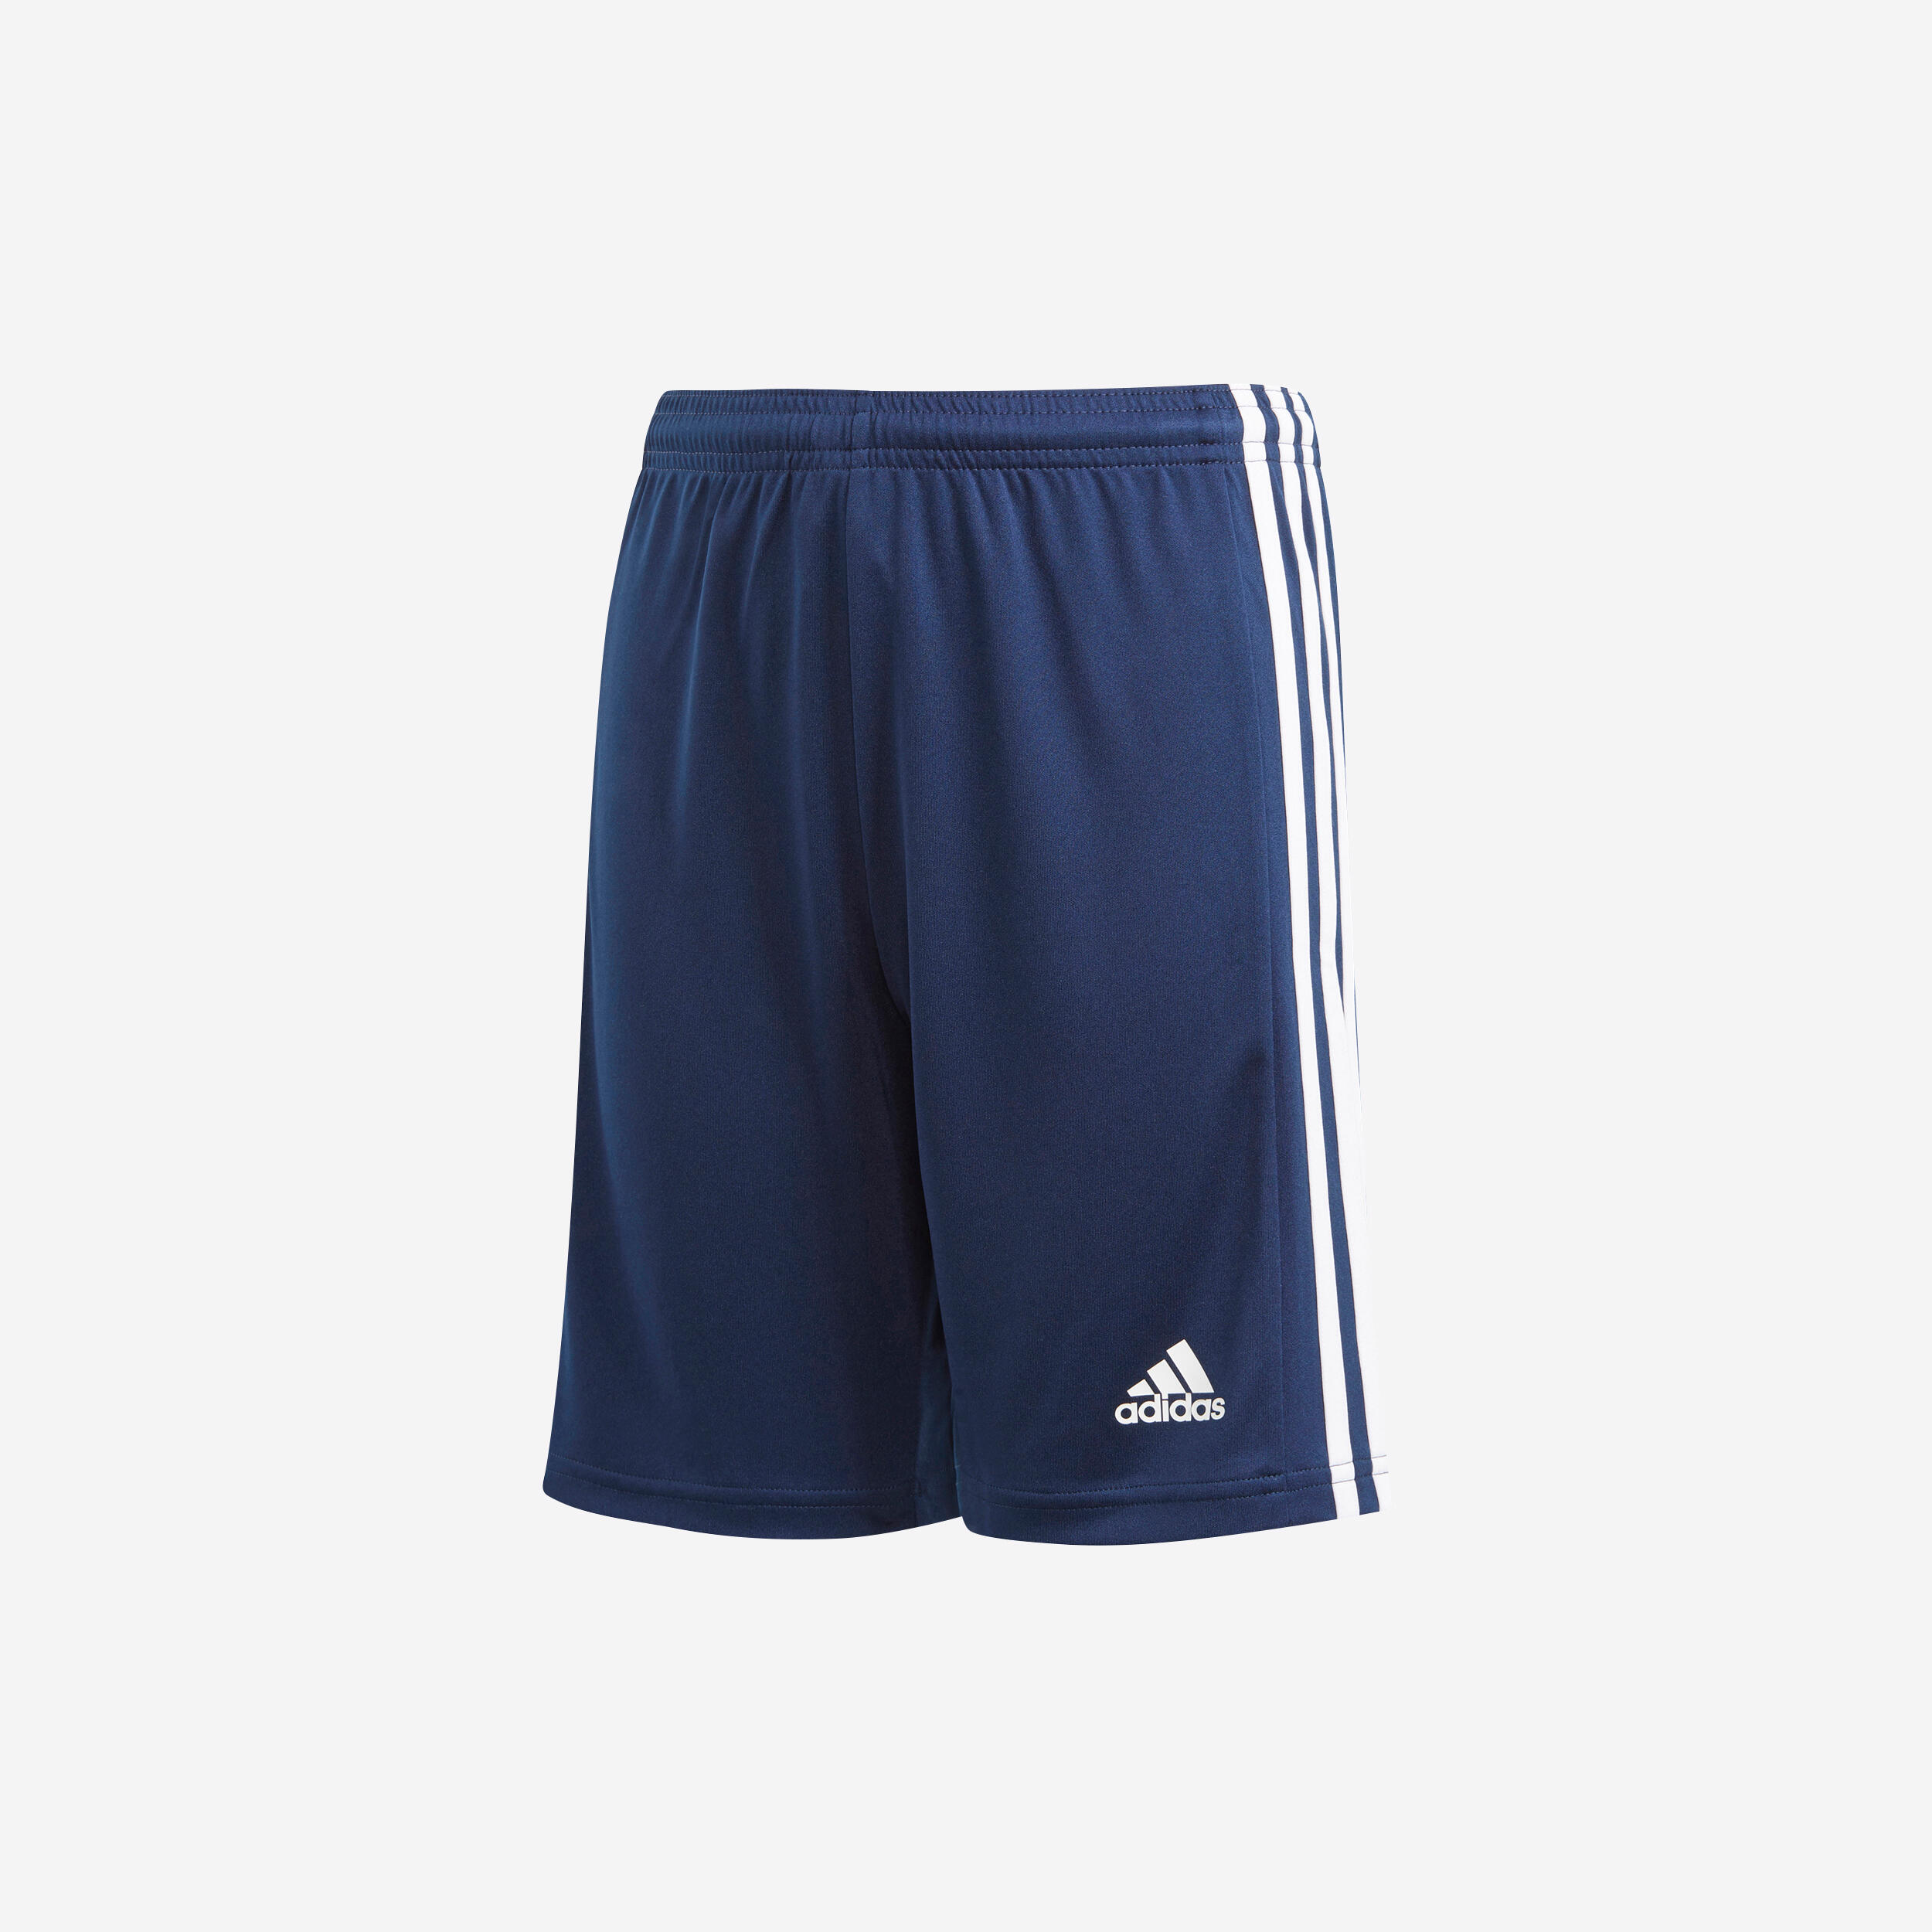 Decathlon | Pantaloncini calcio bambino SQUADRA blu |  Adidas